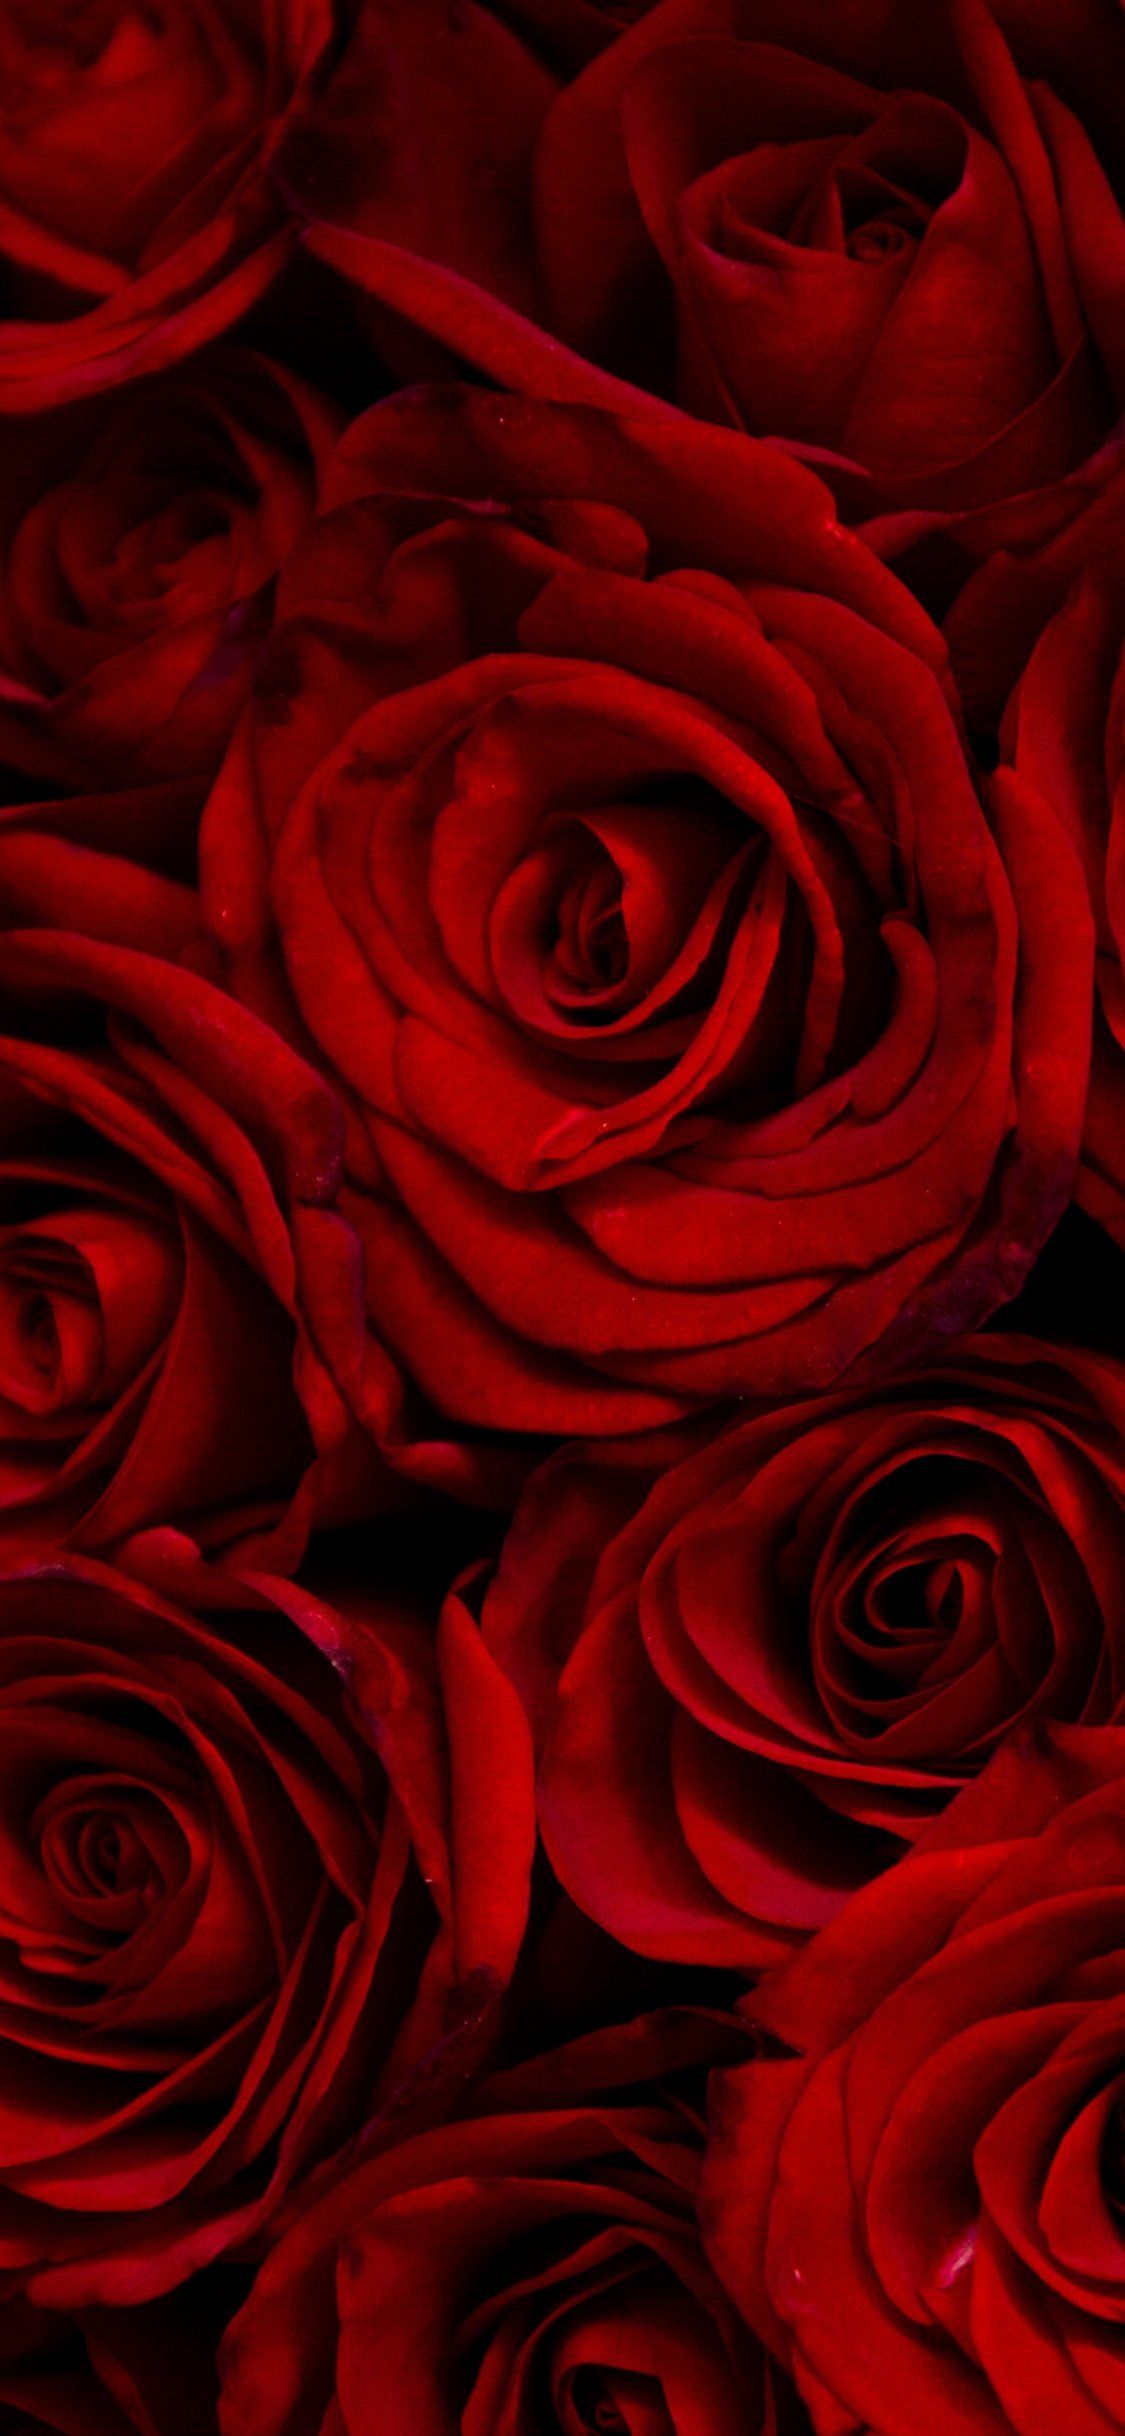 Aesthetic Red Roses Wallpaper Download